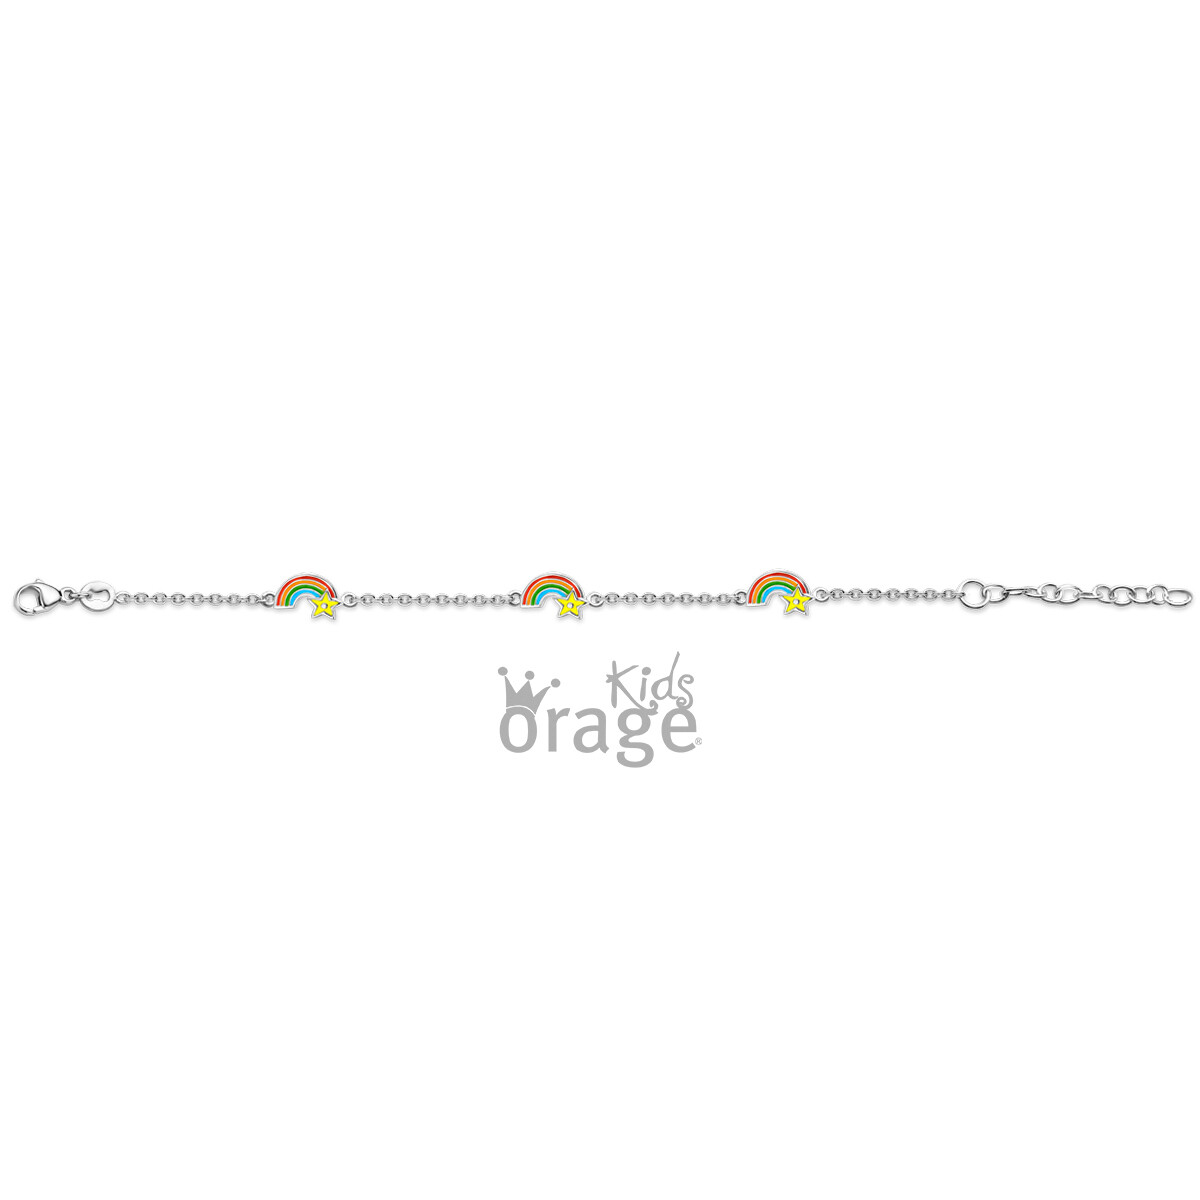 Bracelet Orage Kids K1898